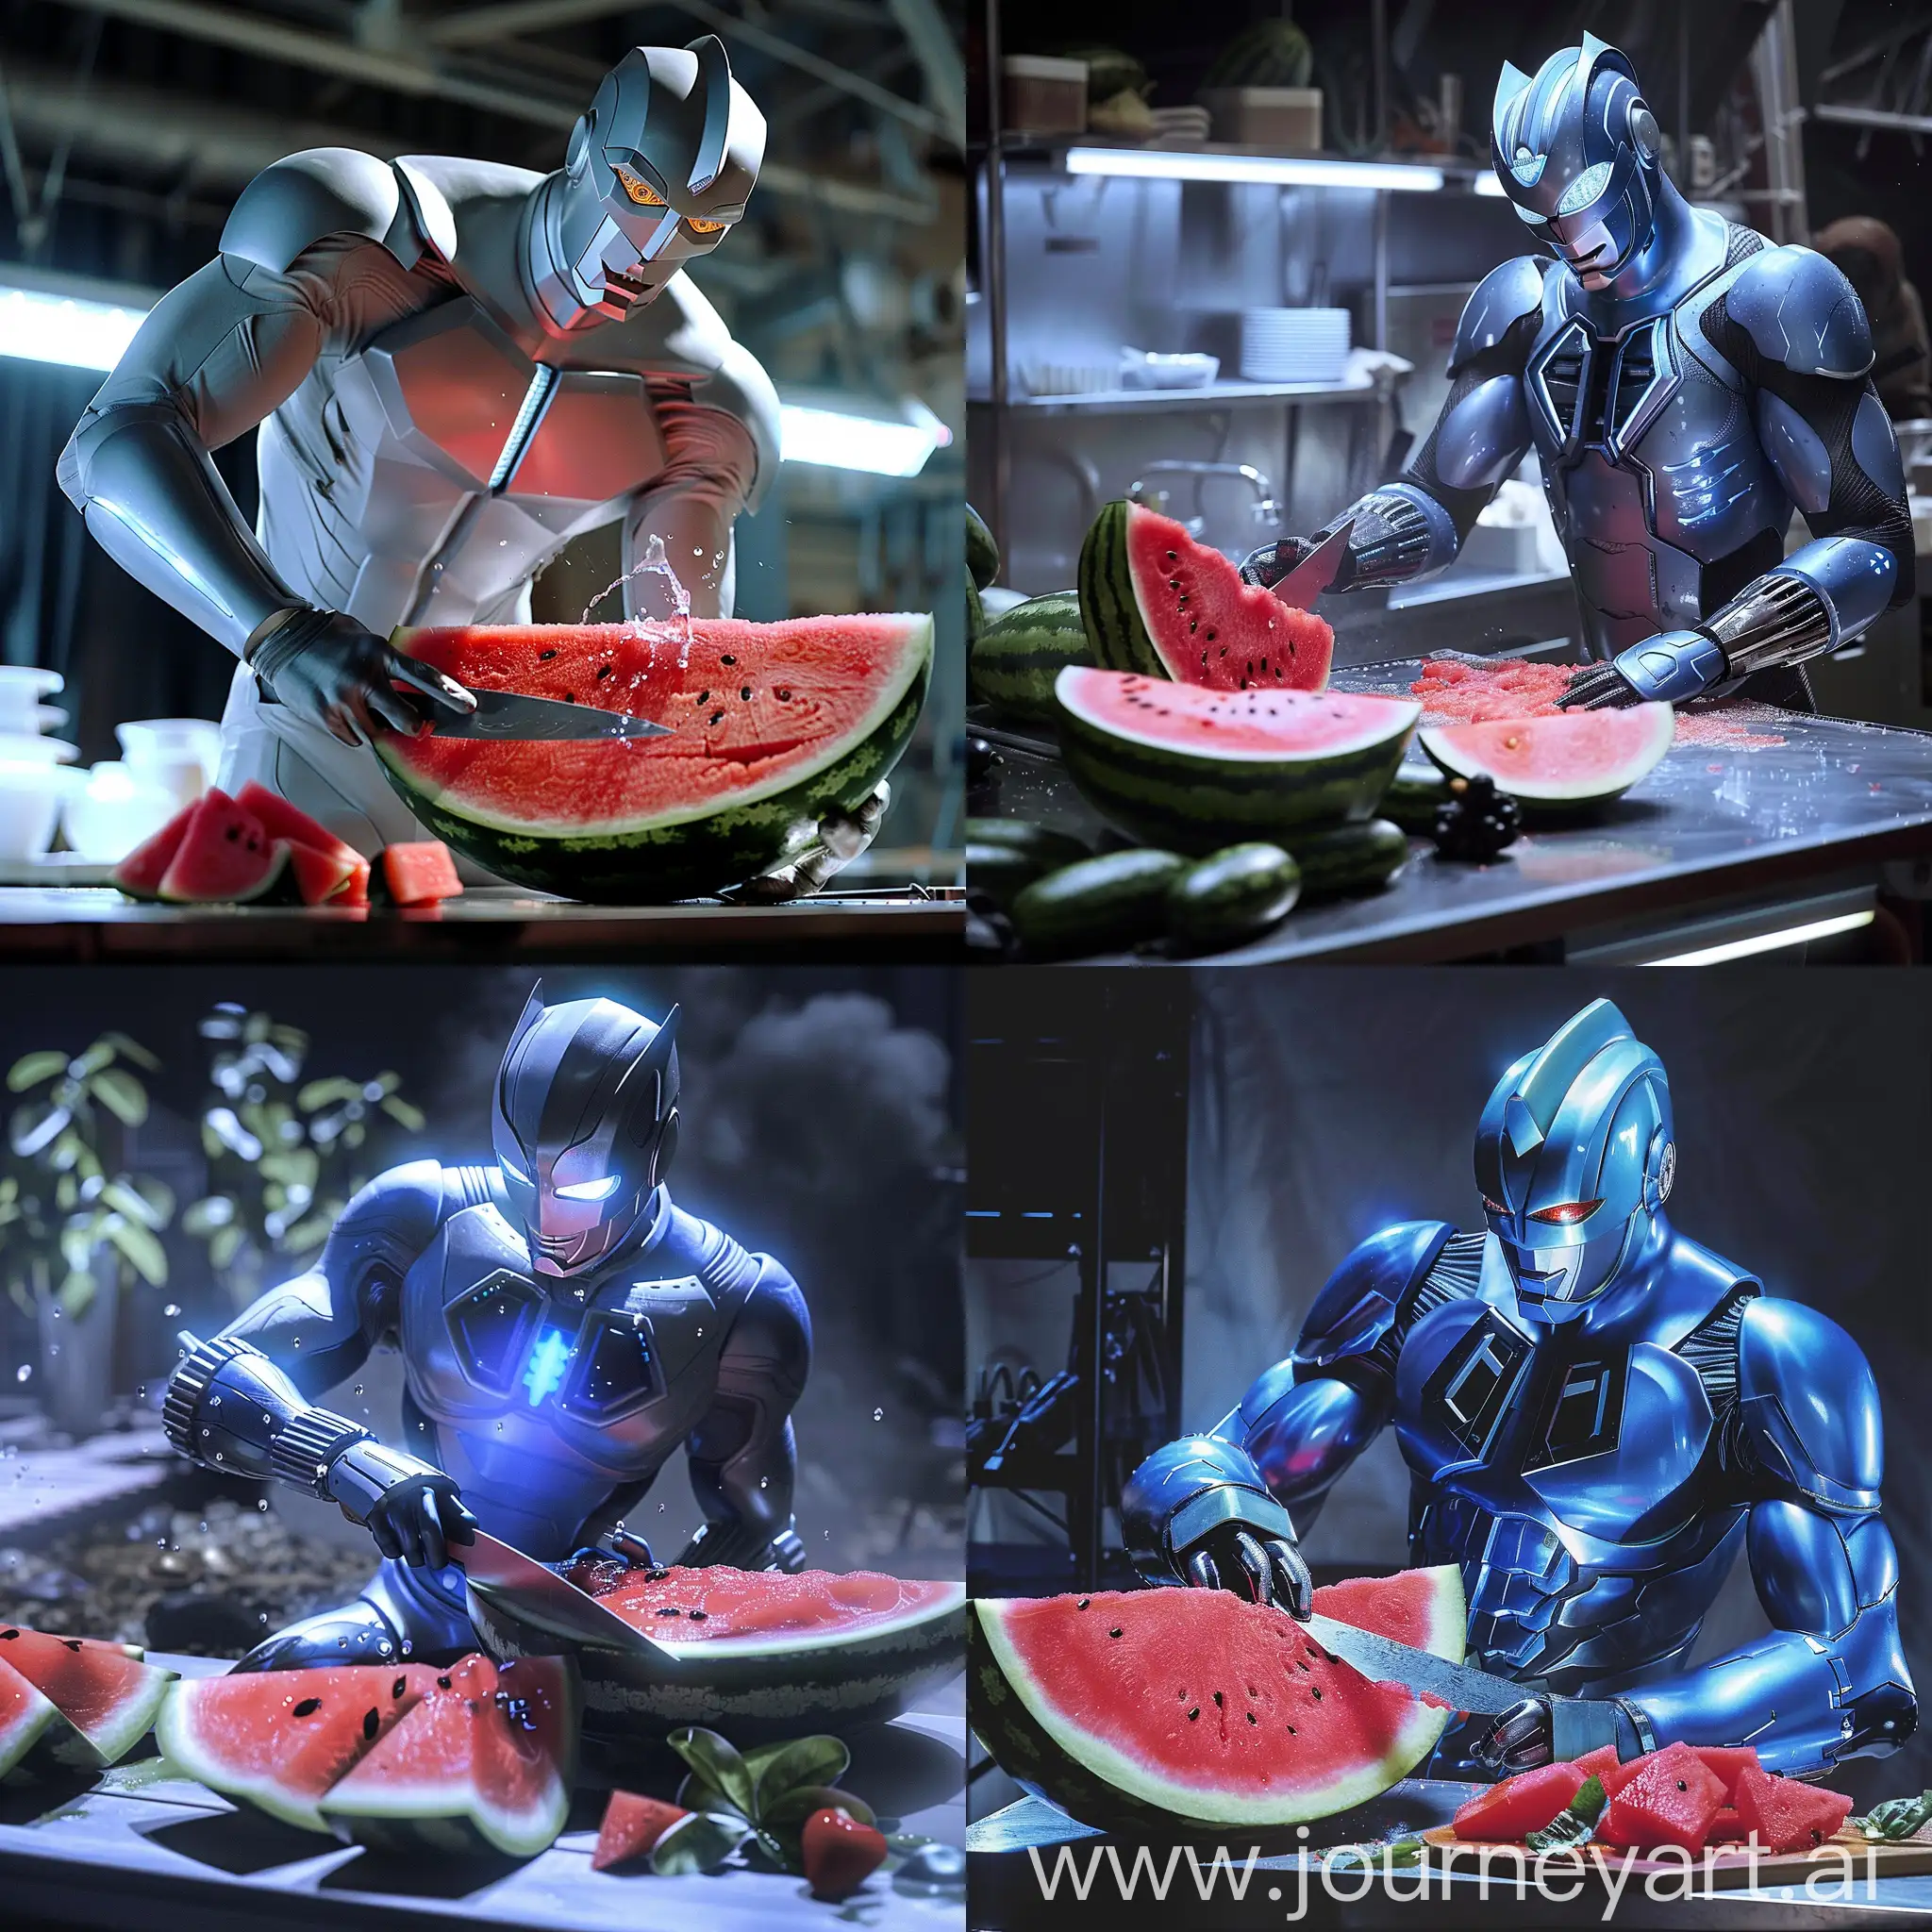 Ultraman-Slicing-Watermelon-with-Precision-Vibrant-11-Image